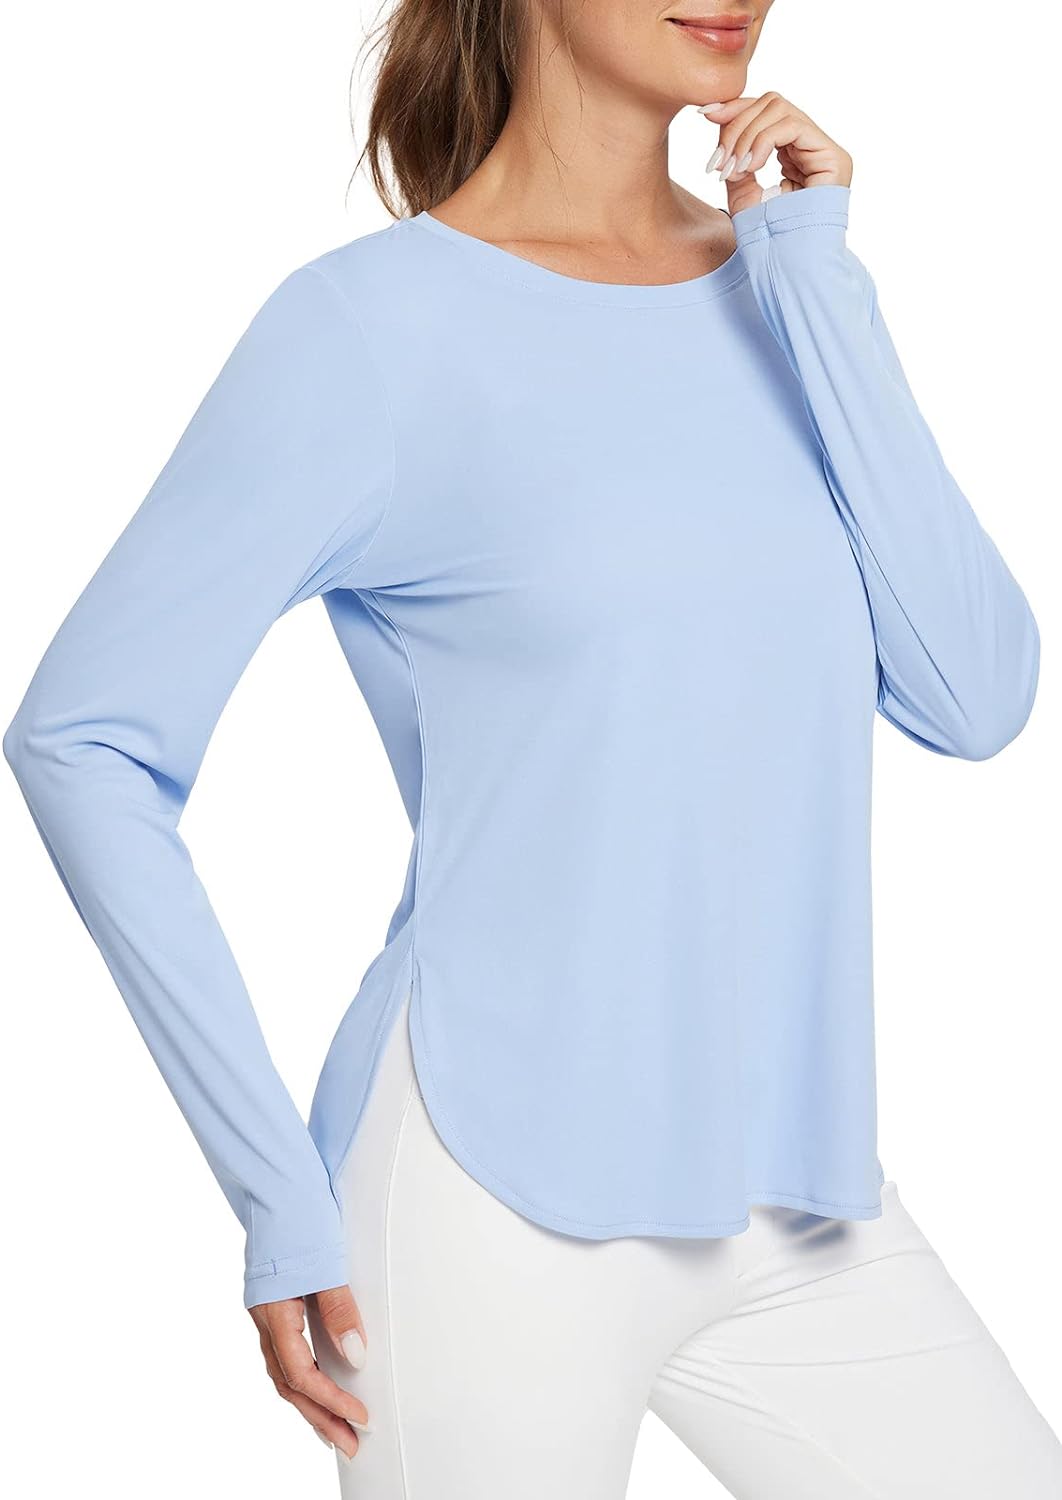 BALEAF Women's Sun Shirts UPF 50+ Long Sleeve Hiking Tops Lightweight Quick  Dry